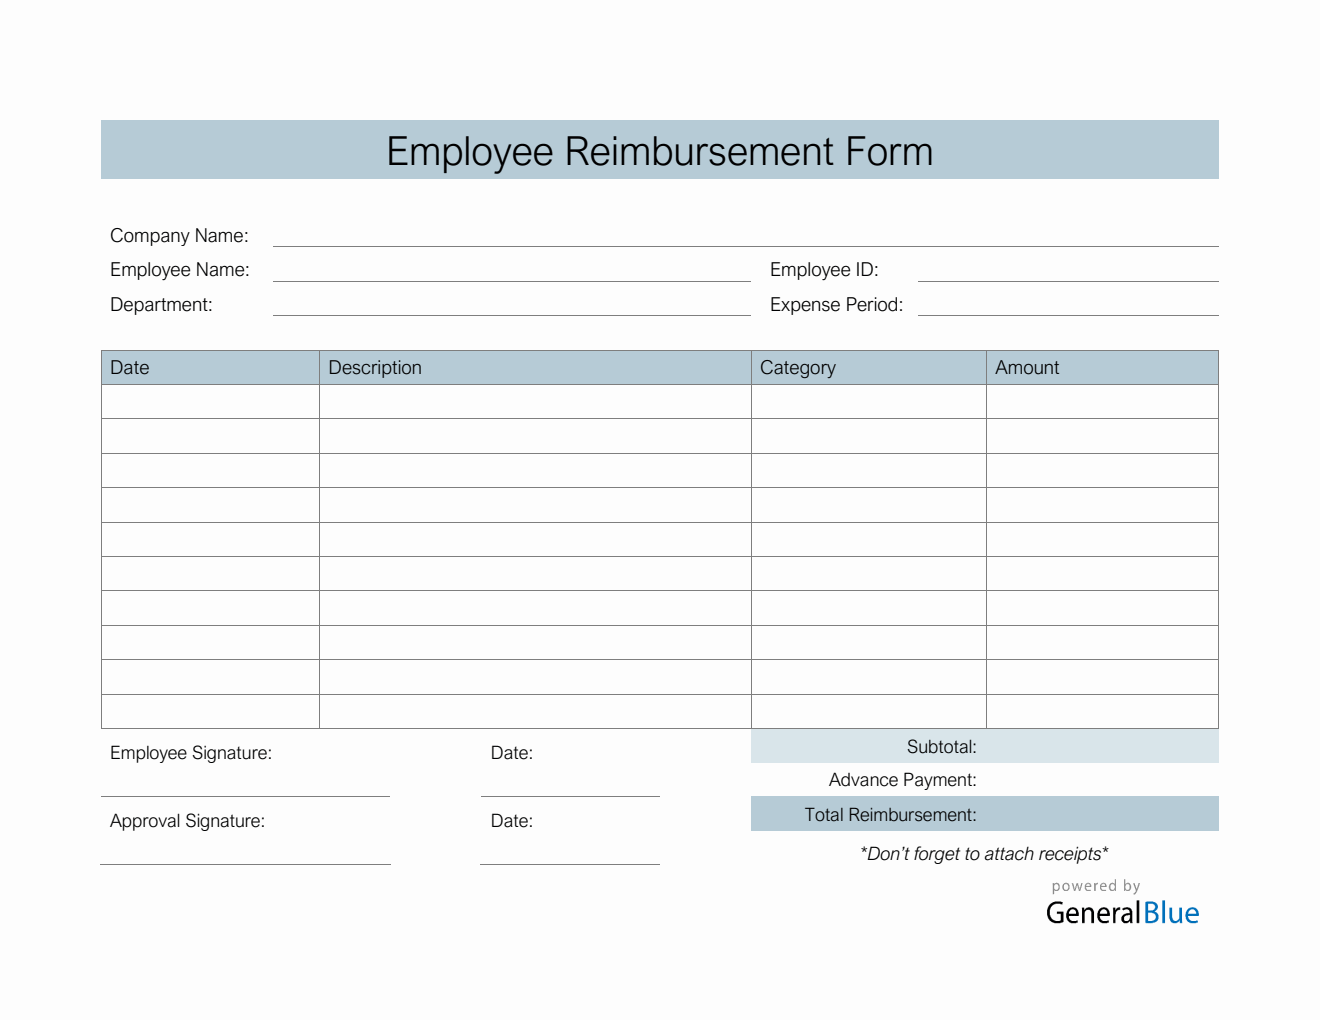 Employee Reimbursement Form in Word (Basic)